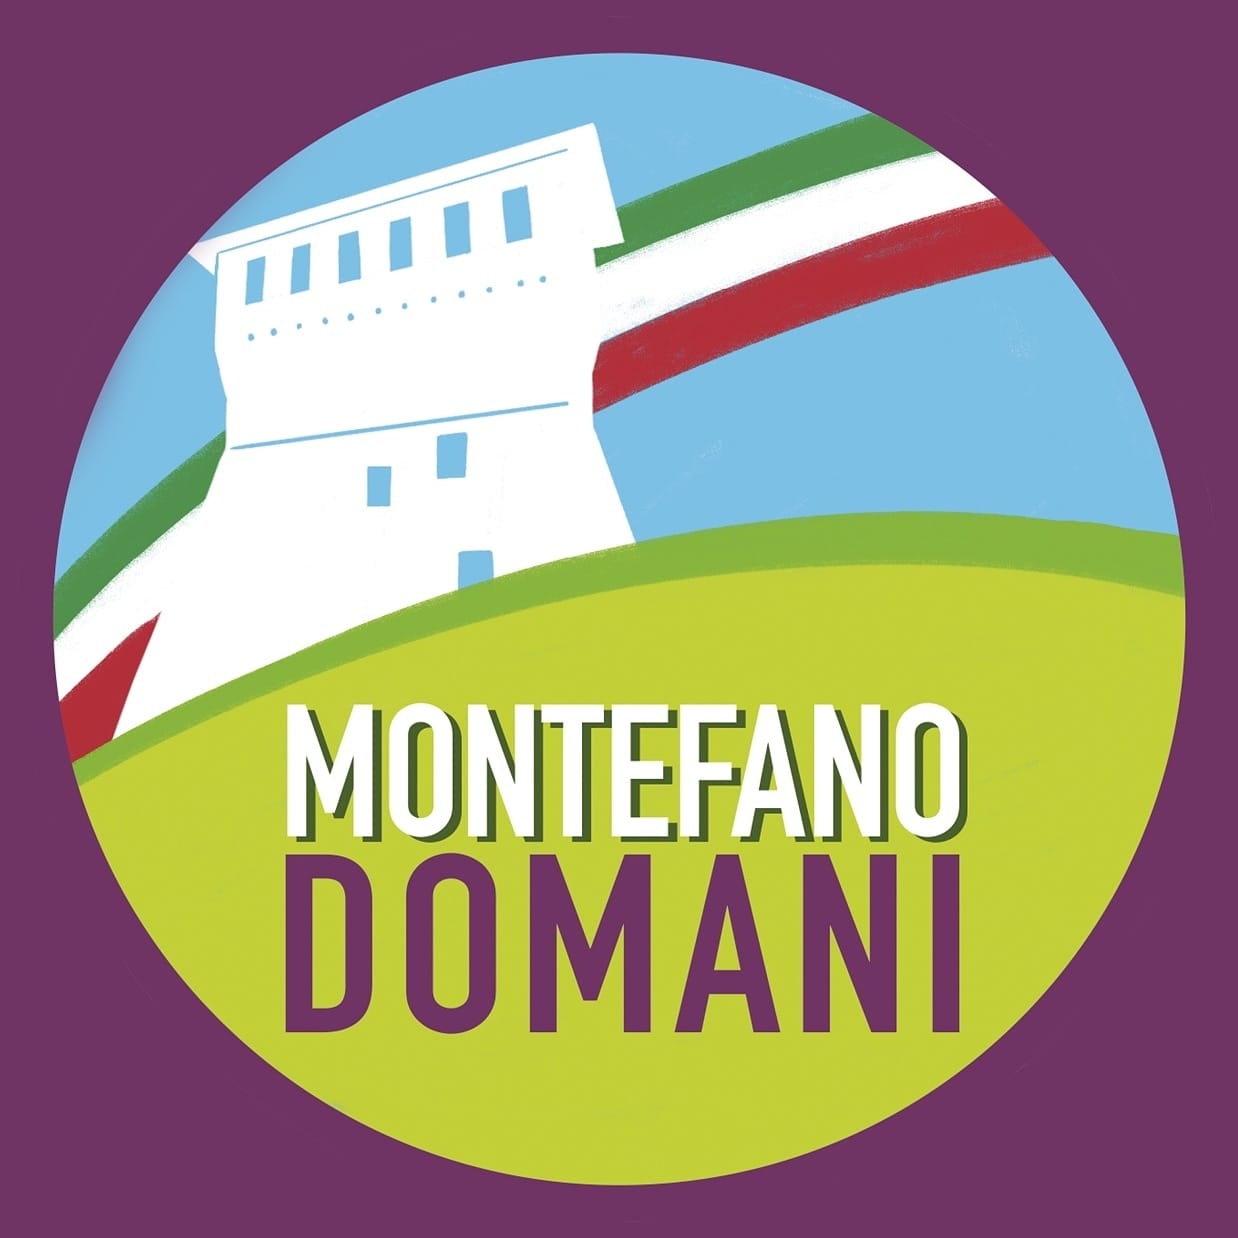 Montefano Domani